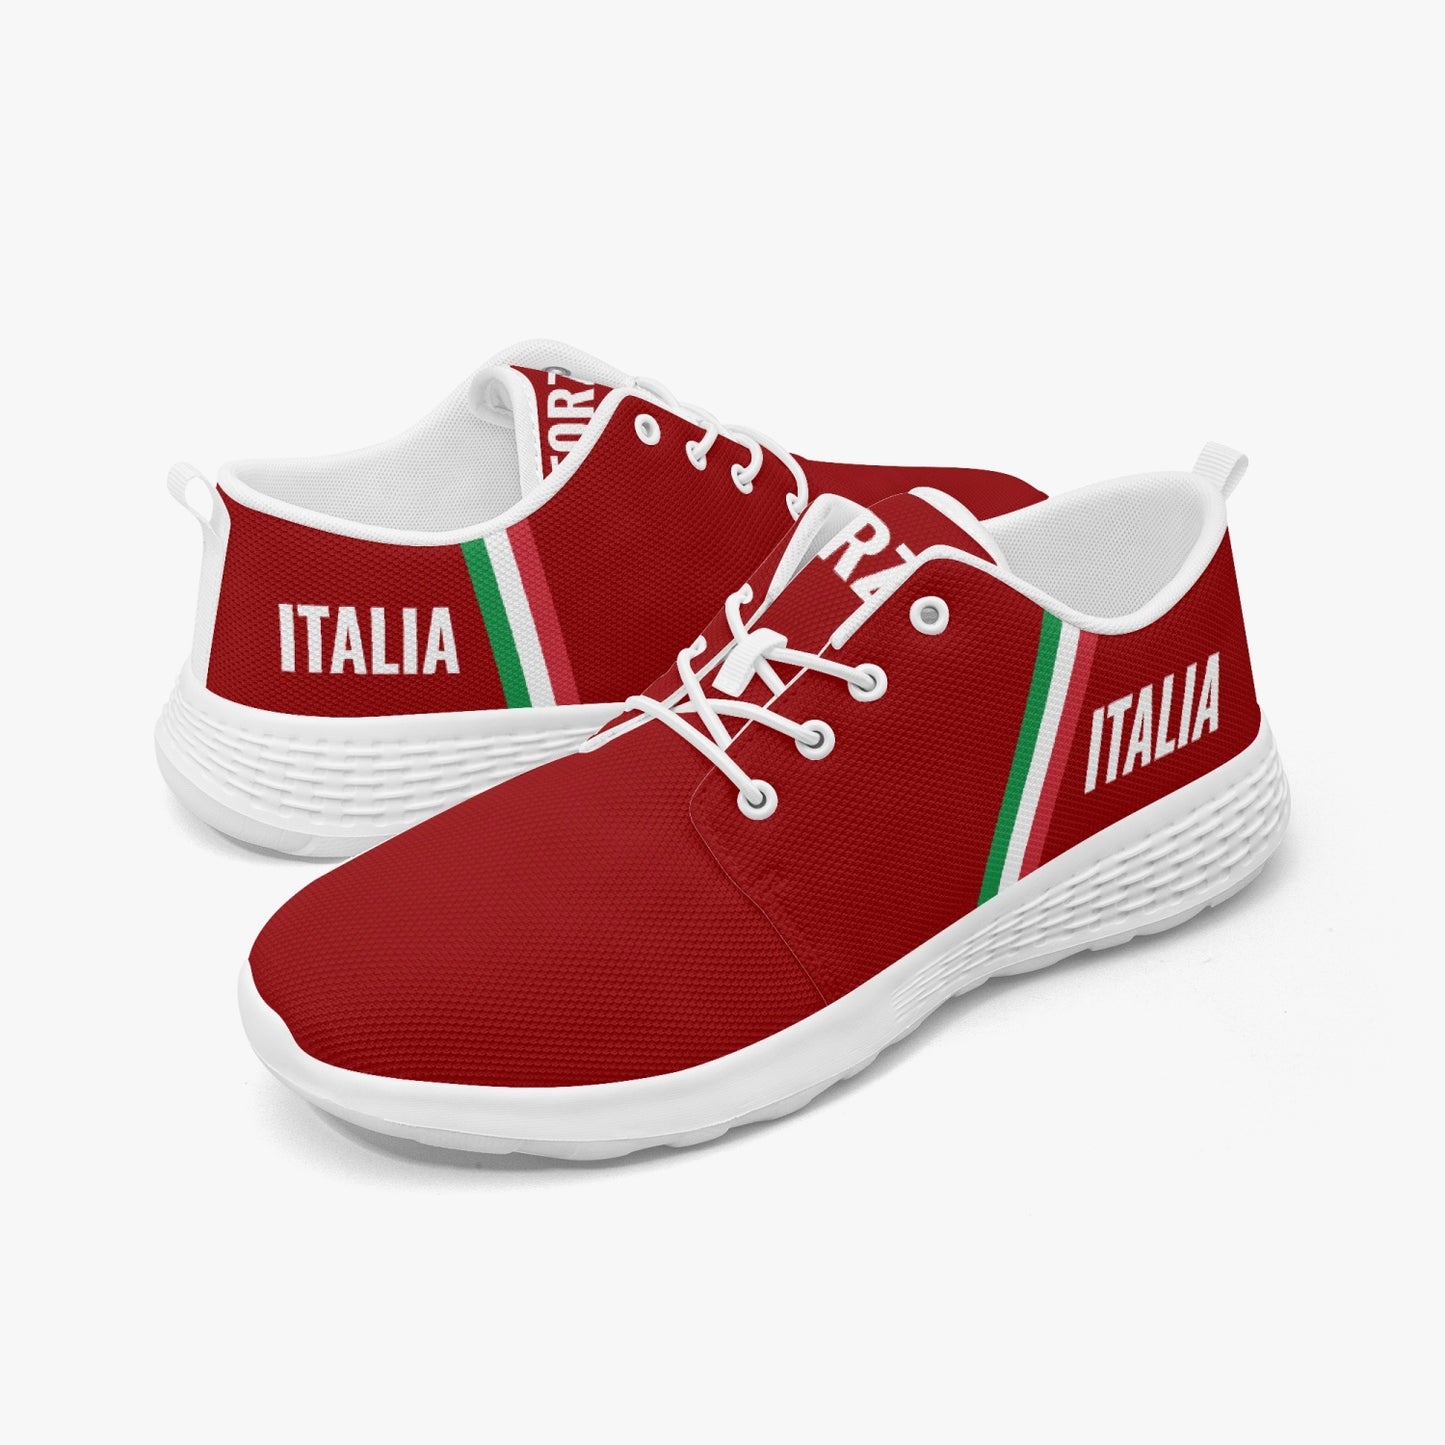 Italy Running Shoes - Forza Italia - Red - men's /women's sizes